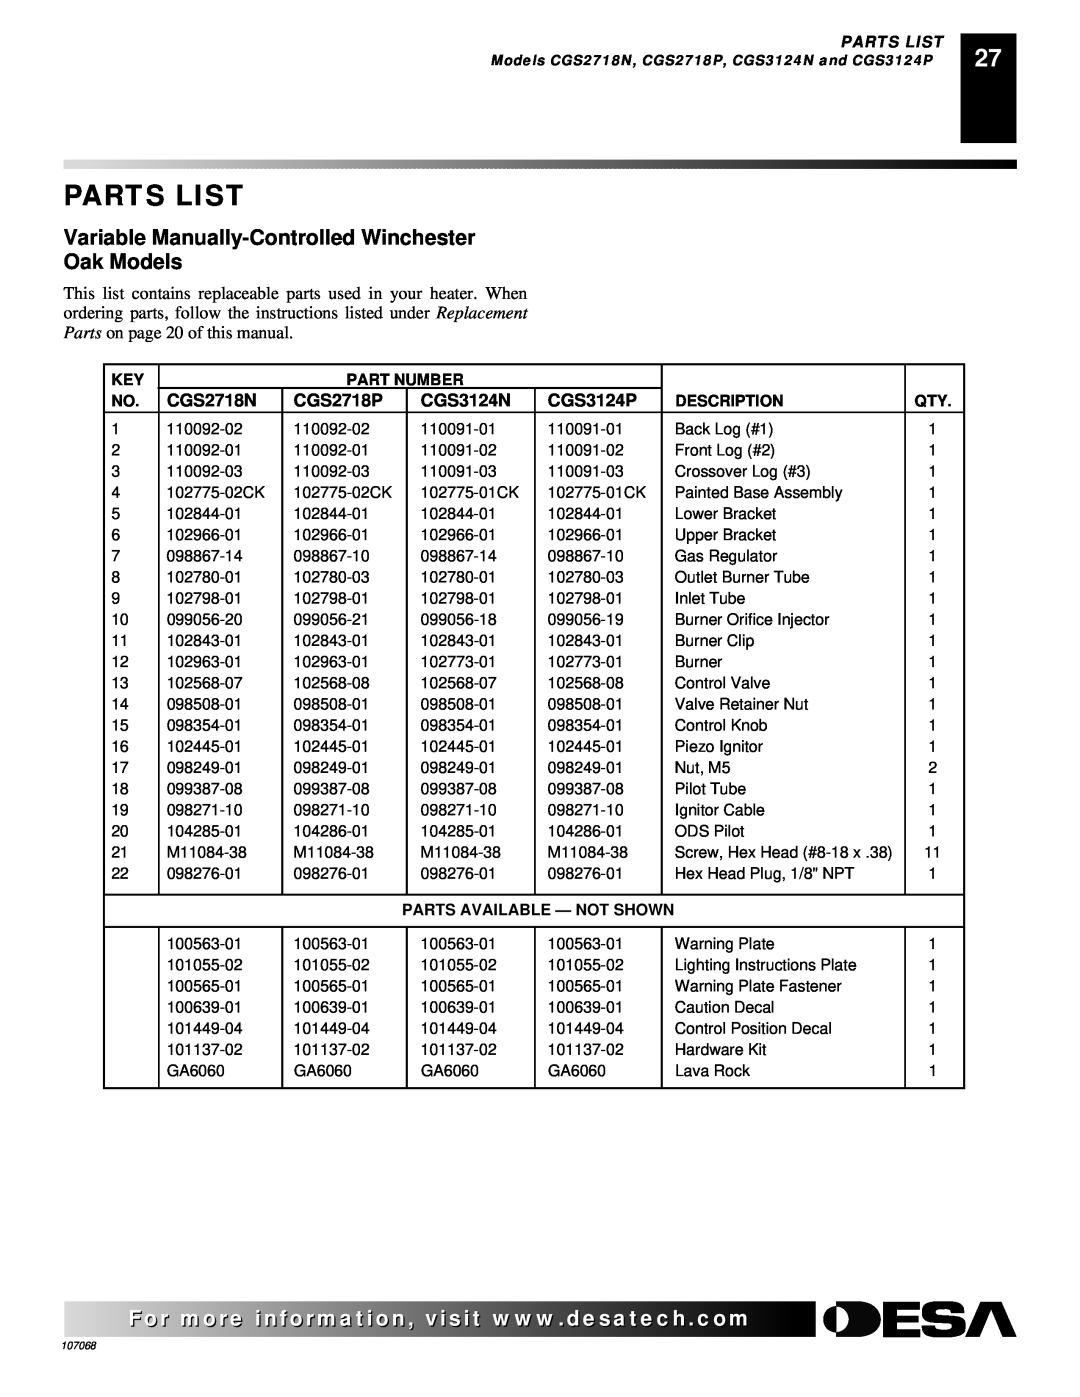 Desa CLD3924PTA, CLD3924NTA Parts List, Variable Manually-ControlledWinchester Oak Models, Part Number, Description 